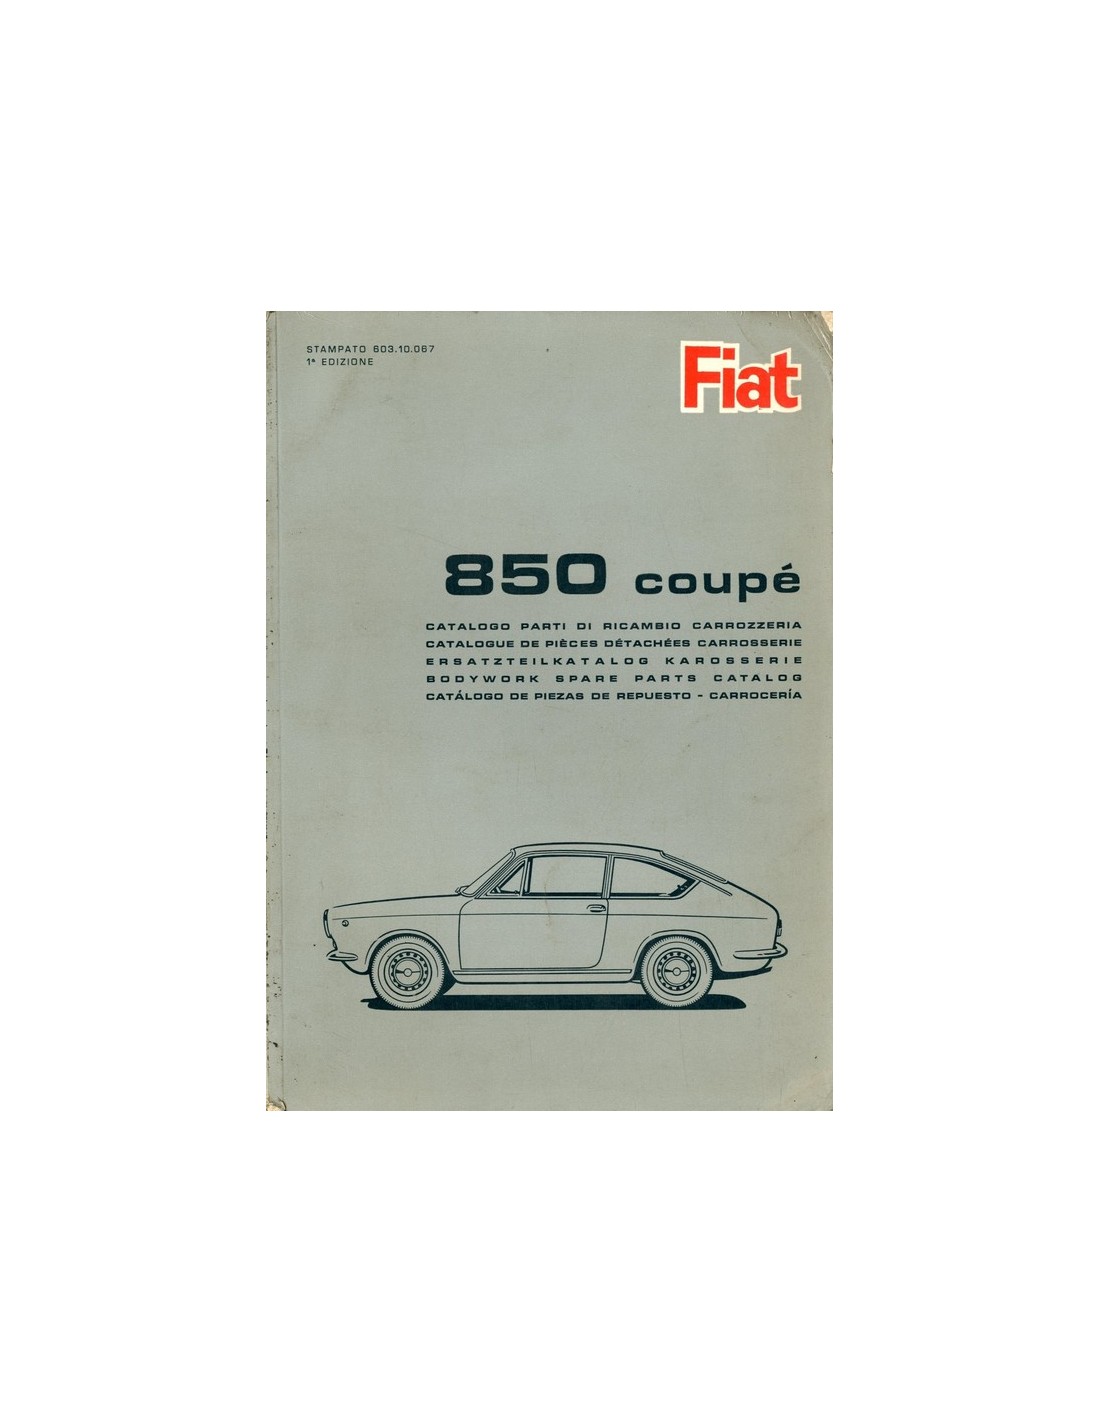 1965 FIAT 850 COUPE SPARE PARTS BODYWORK CATALOG